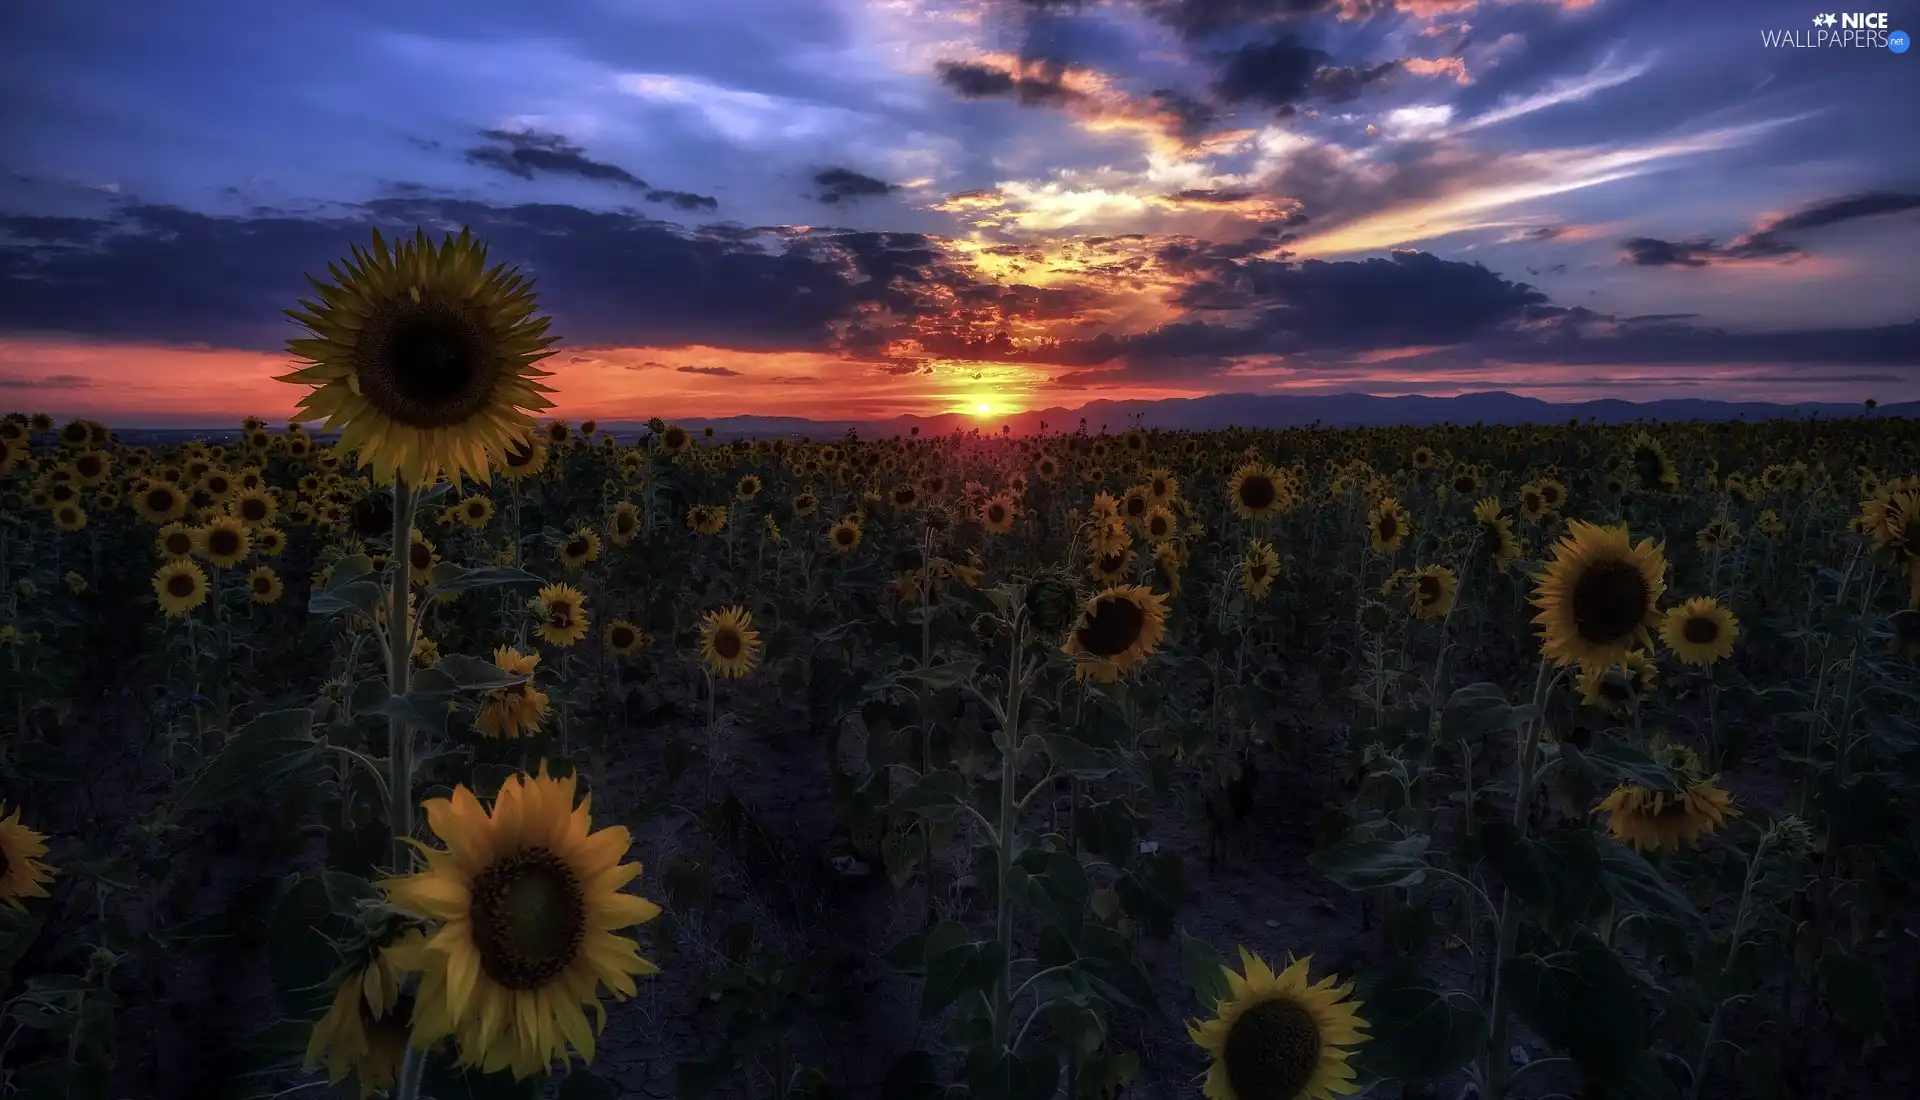 Great Sunsets, Flowers, Nice sunflowers, Field